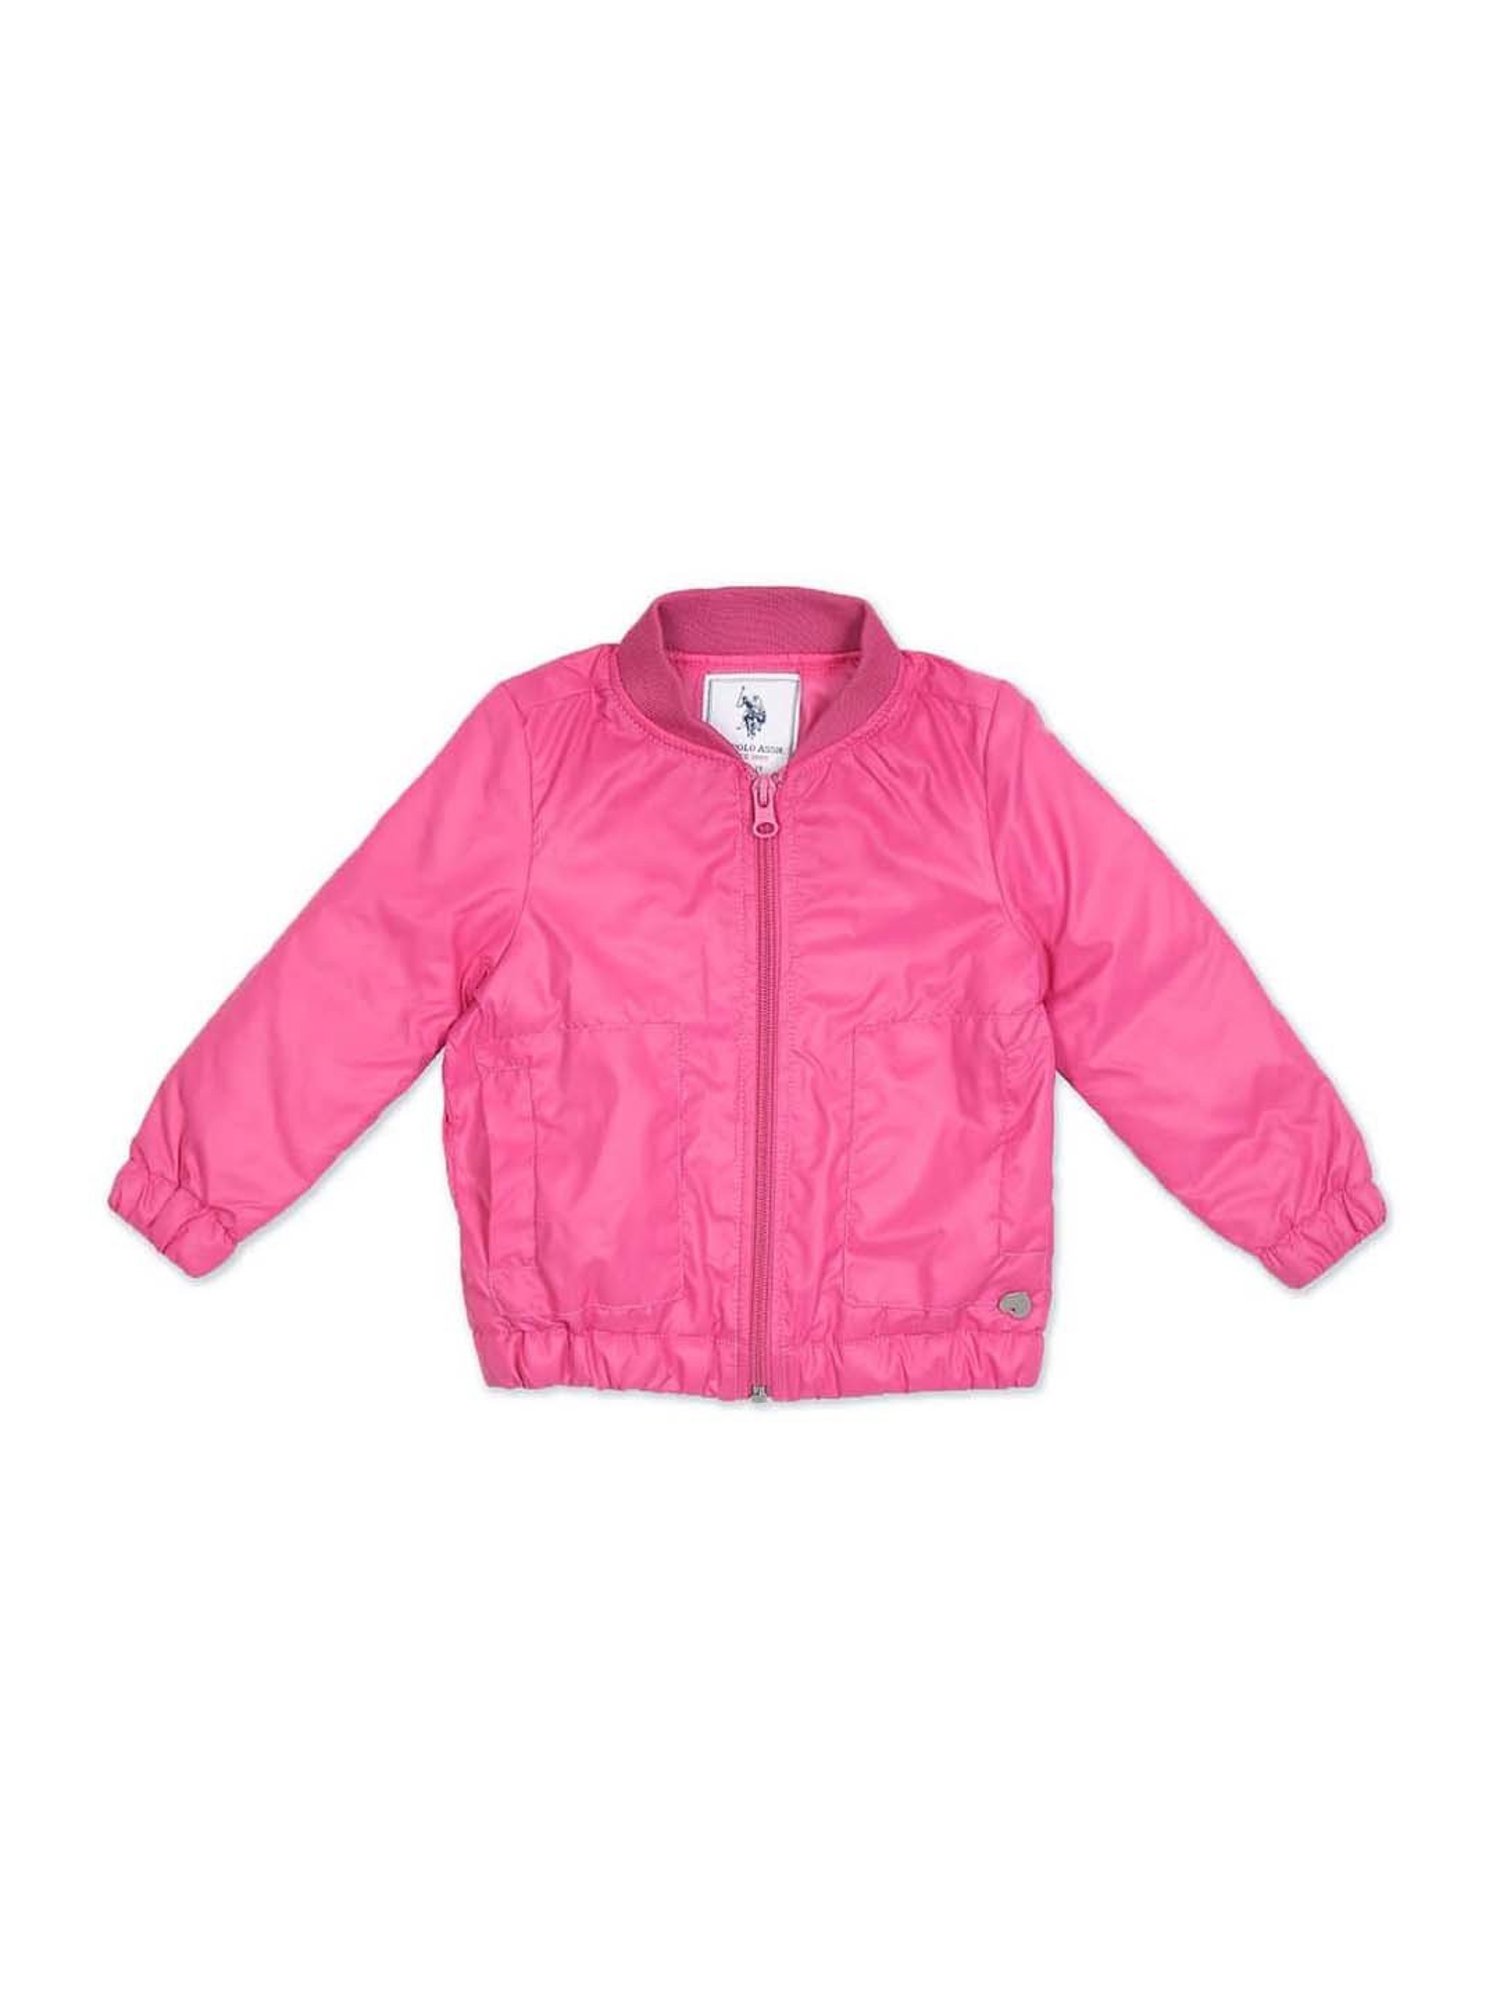 Ladies Pink Full Sleeve Jacket at Rs 130/piece | Ladies Jackets in Rohtak |  ID: 22846492291